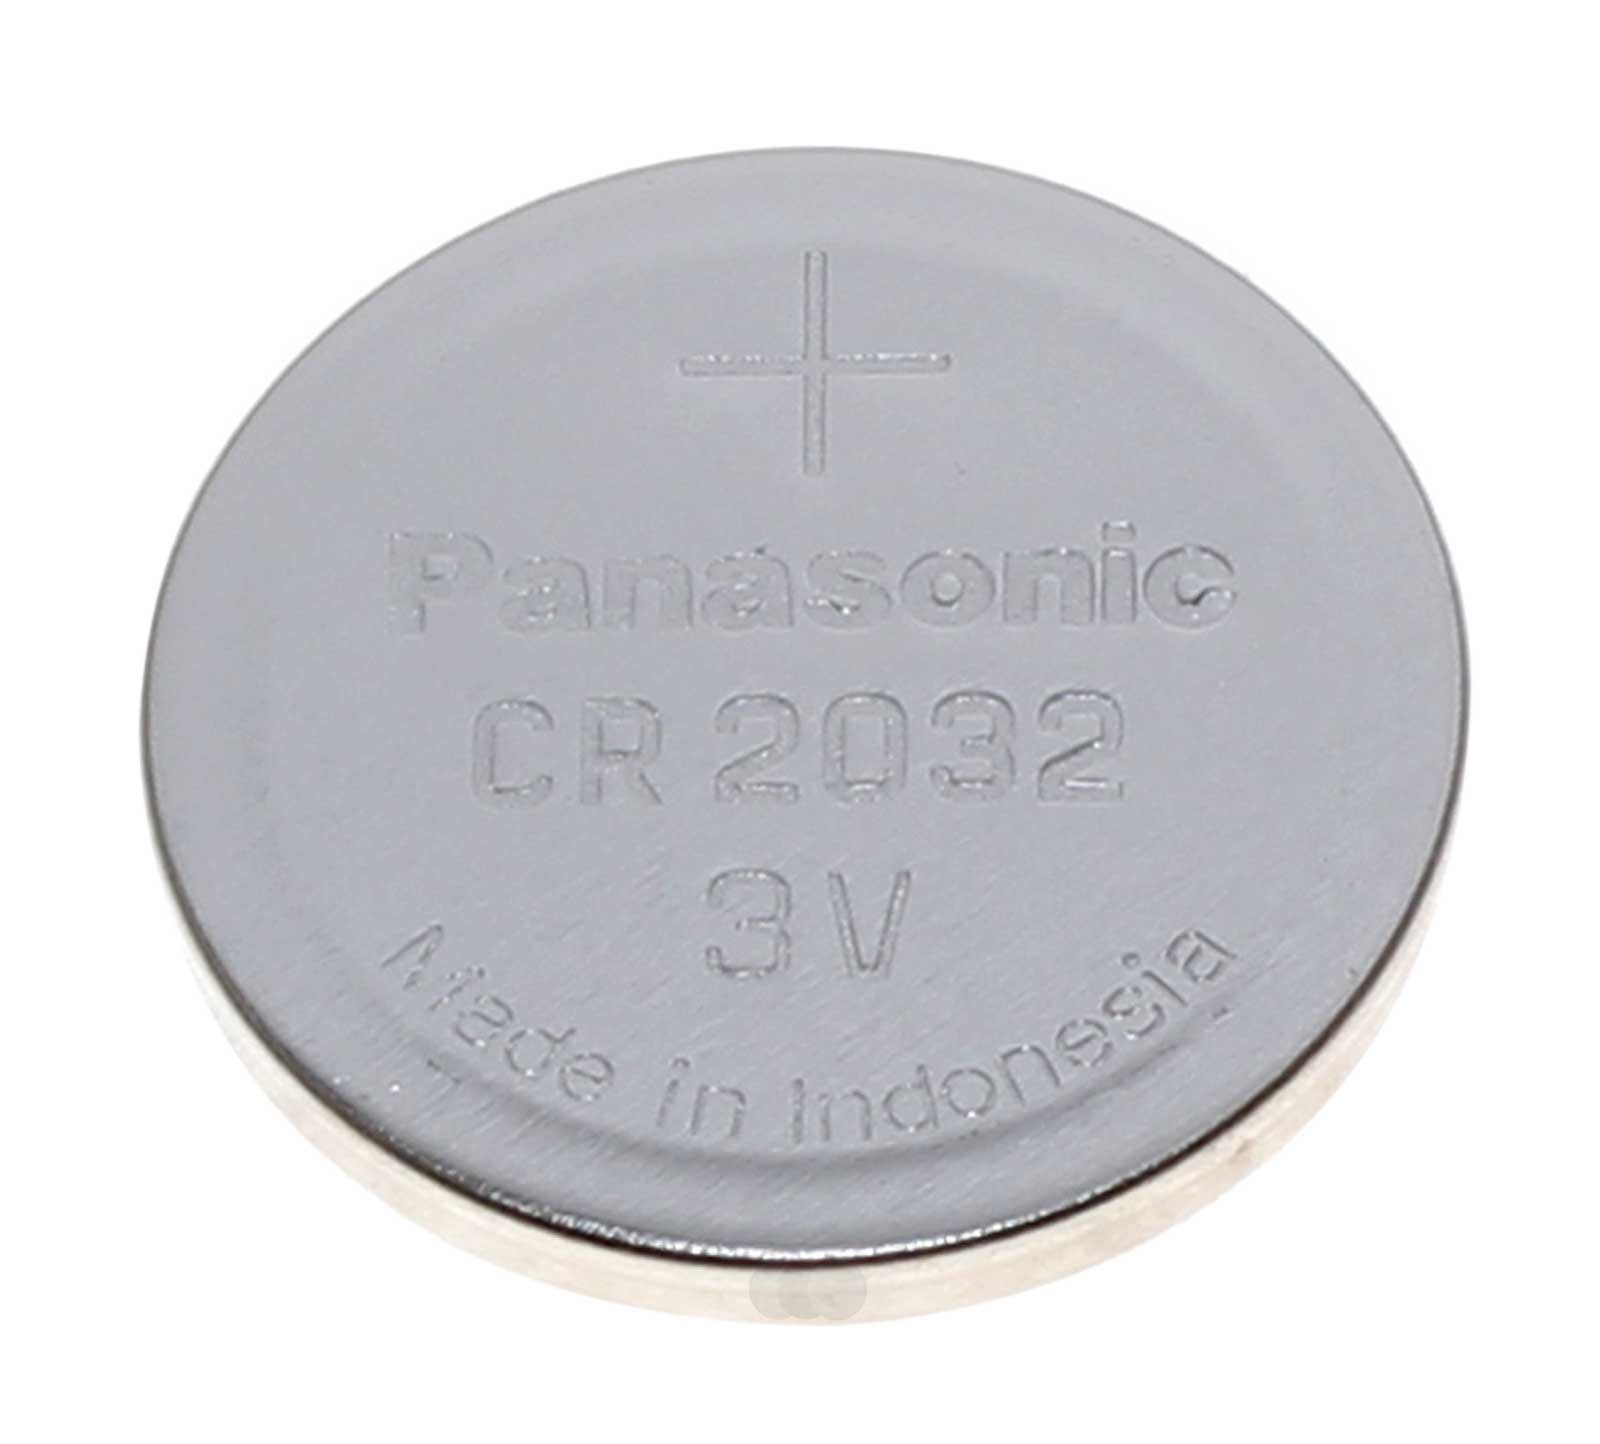 Panasonic CR2032 Lithium Knopfzelle, Batterie mit 3 Volt und 220mAh Kapazität